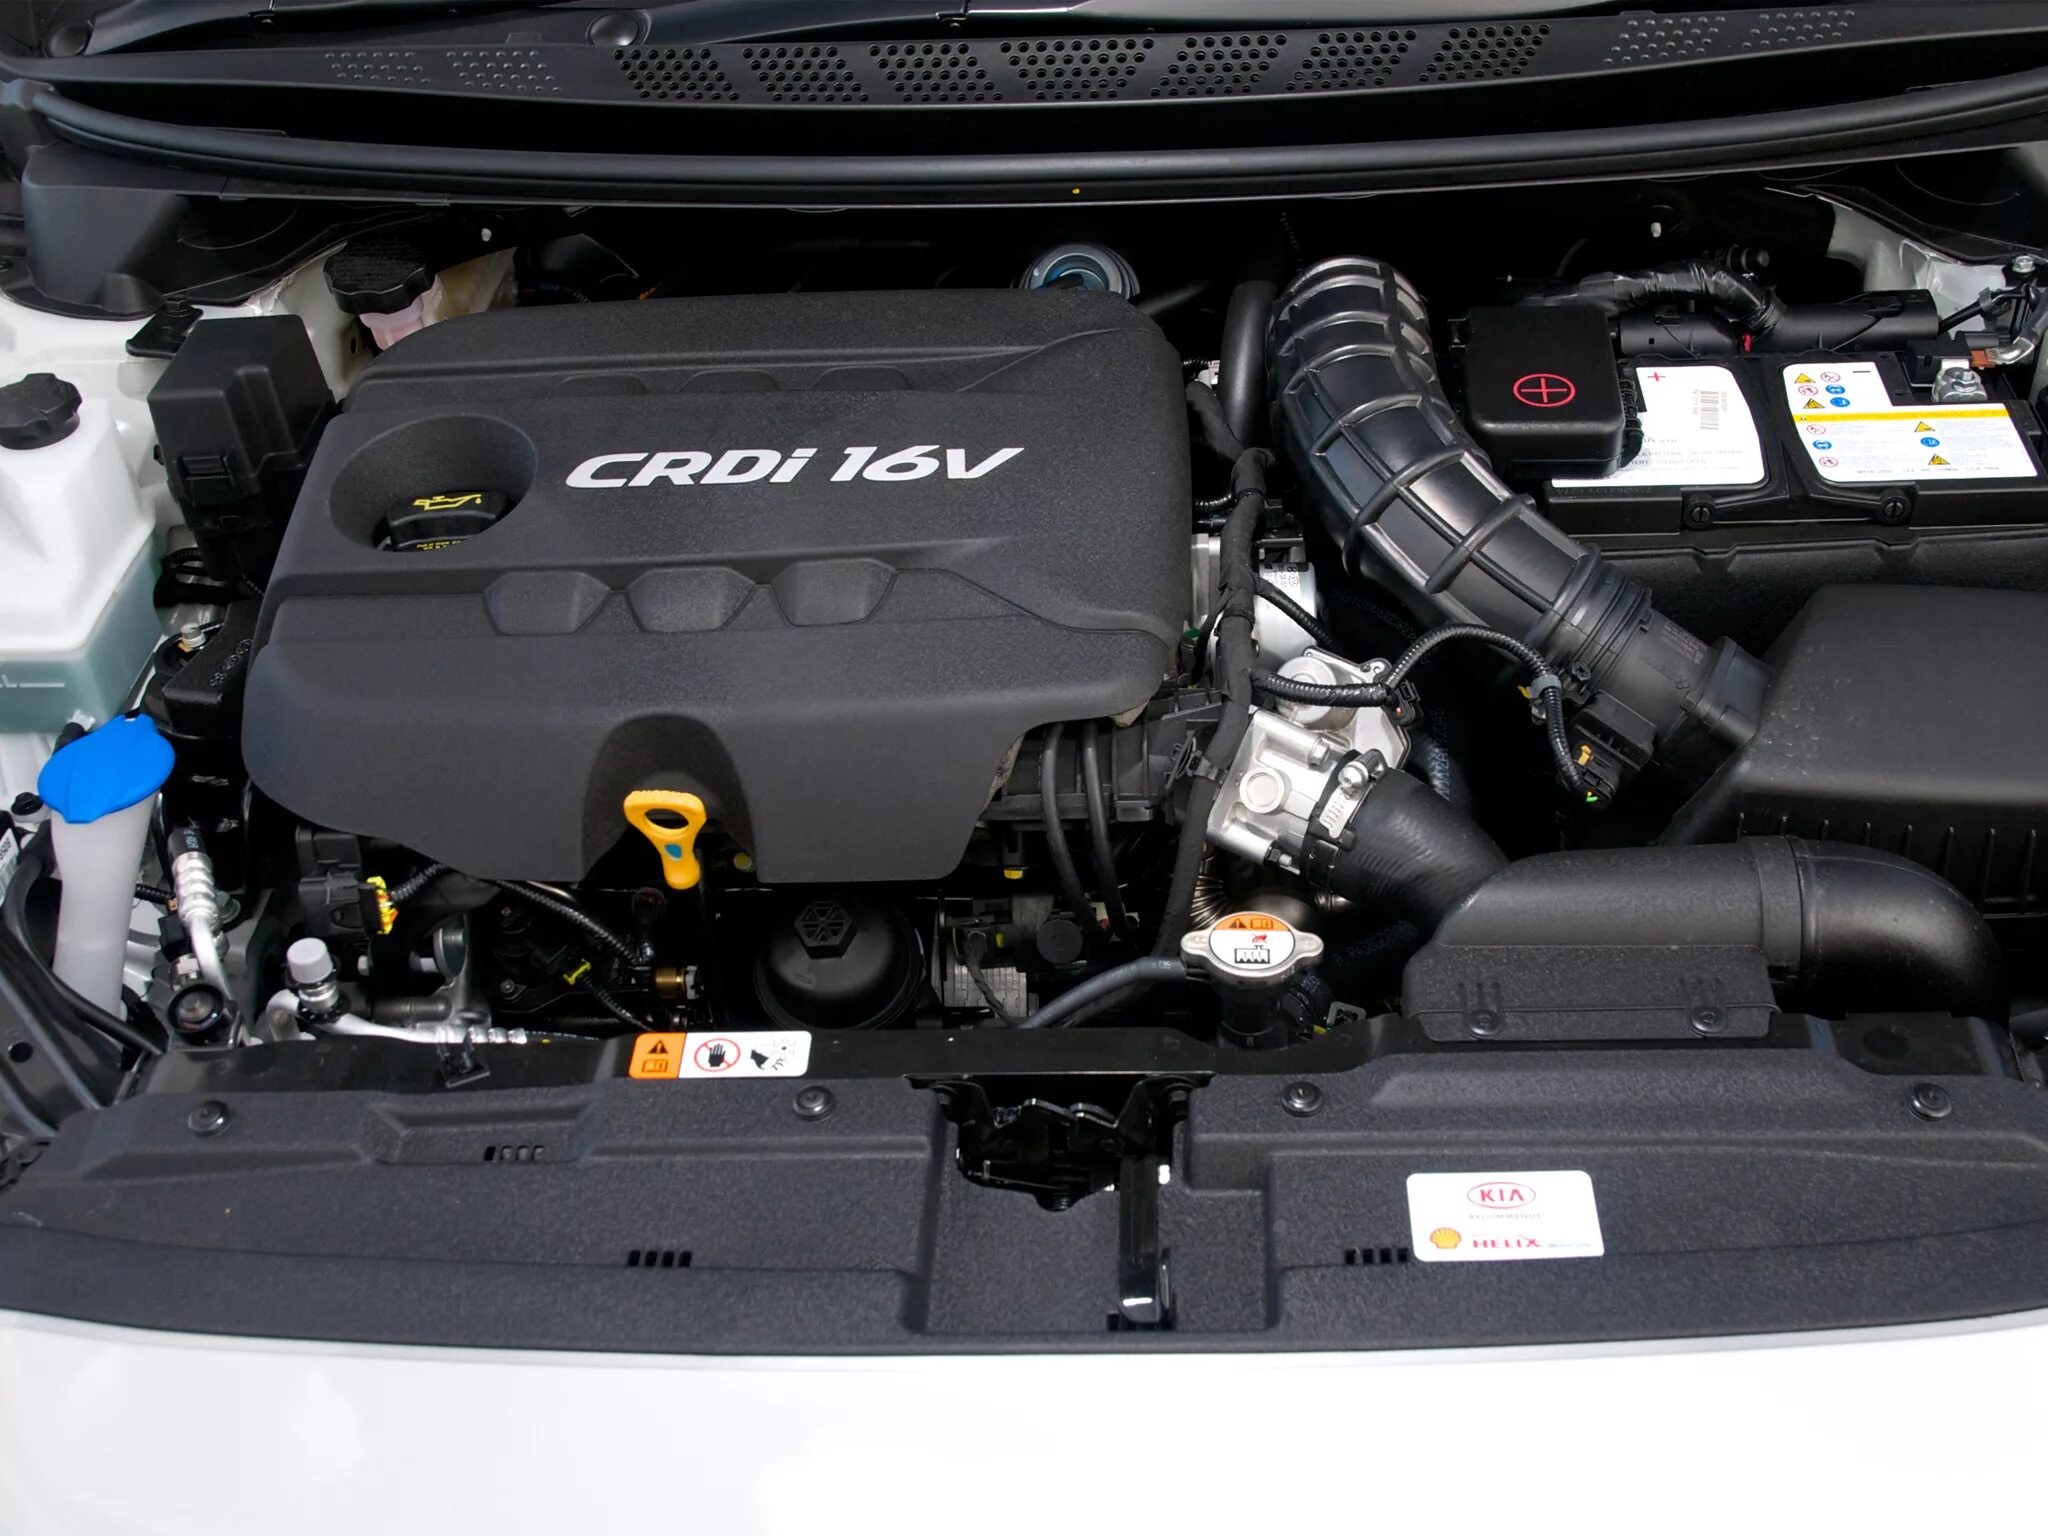 Kia ceed какой двигатель. Kia Ceed 2010 под капотом. Киа СИД 2008 под капотом. Двигатель кия СИД 1.6. Киа СИД 1 под капотом.